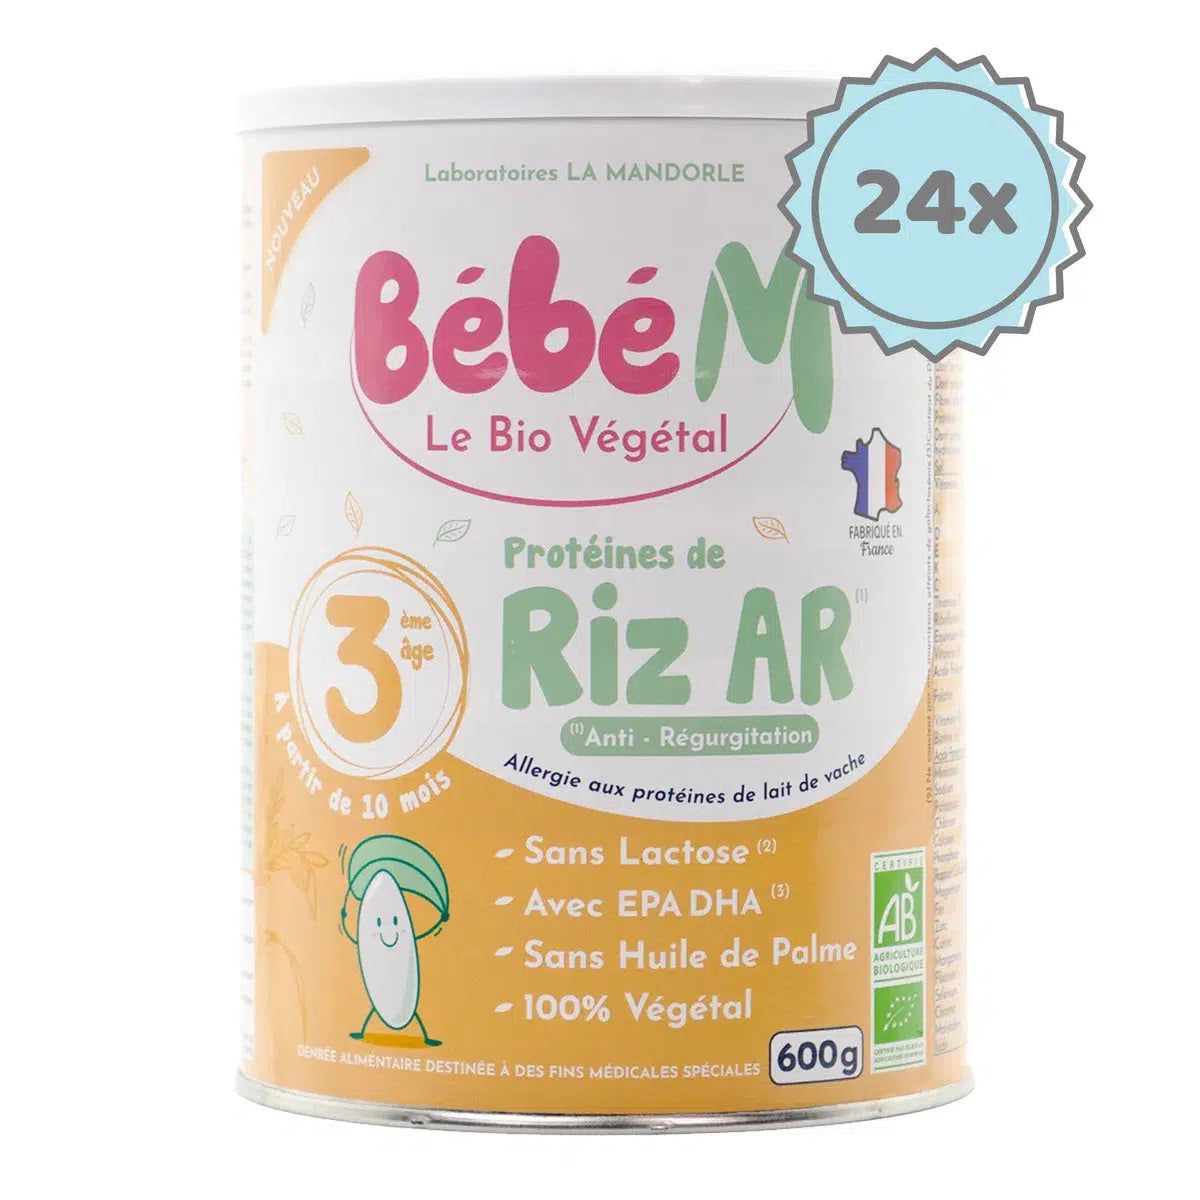 Bebe M (Bebe Mandorle) Organic Anti-Reflux Rice-Based Formula - Stage 3 (10+ months) | Organic Baby Formula | 24 cans